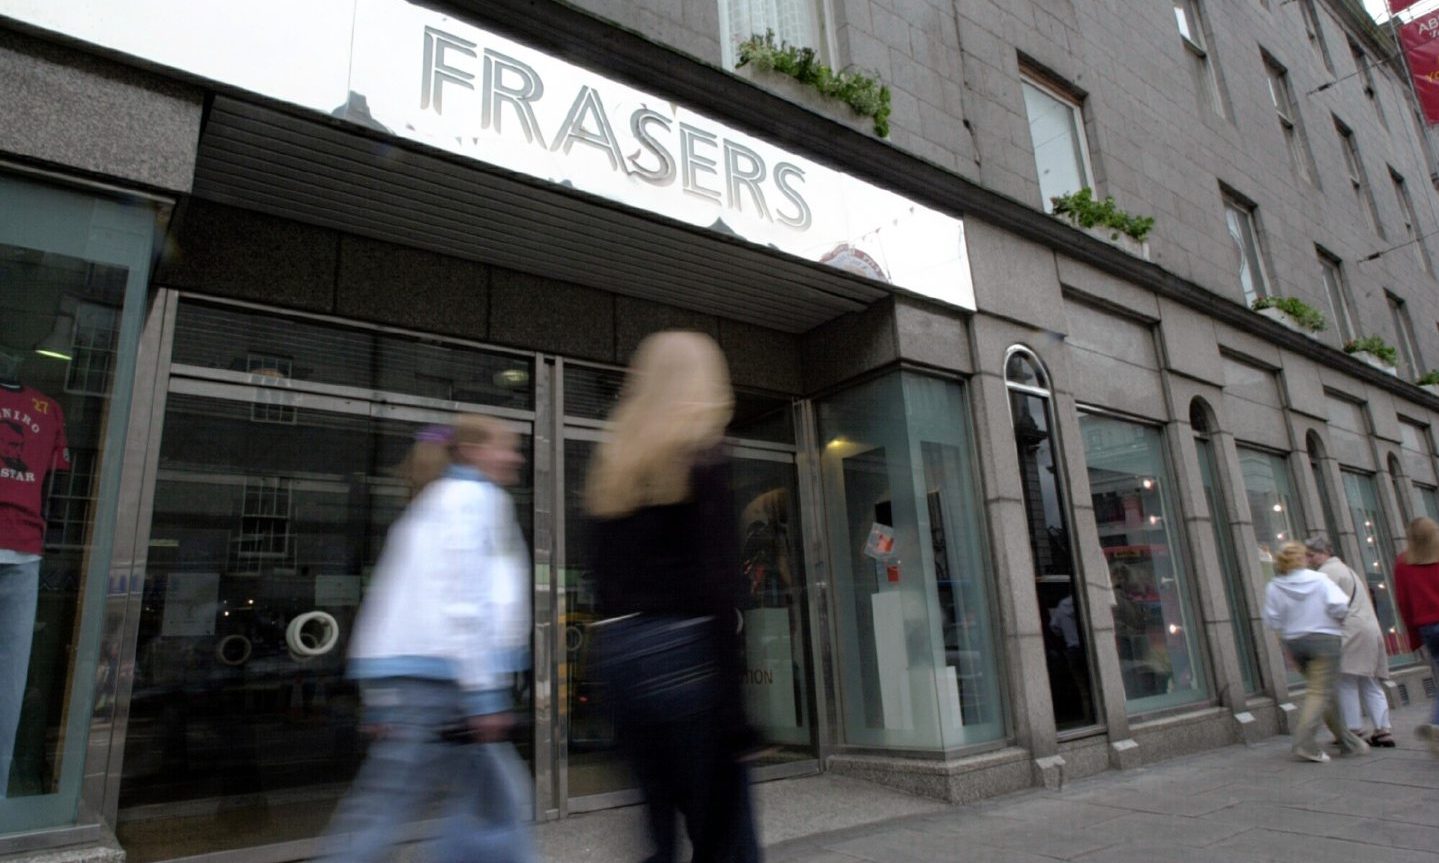 'Frasers' signage on storefront